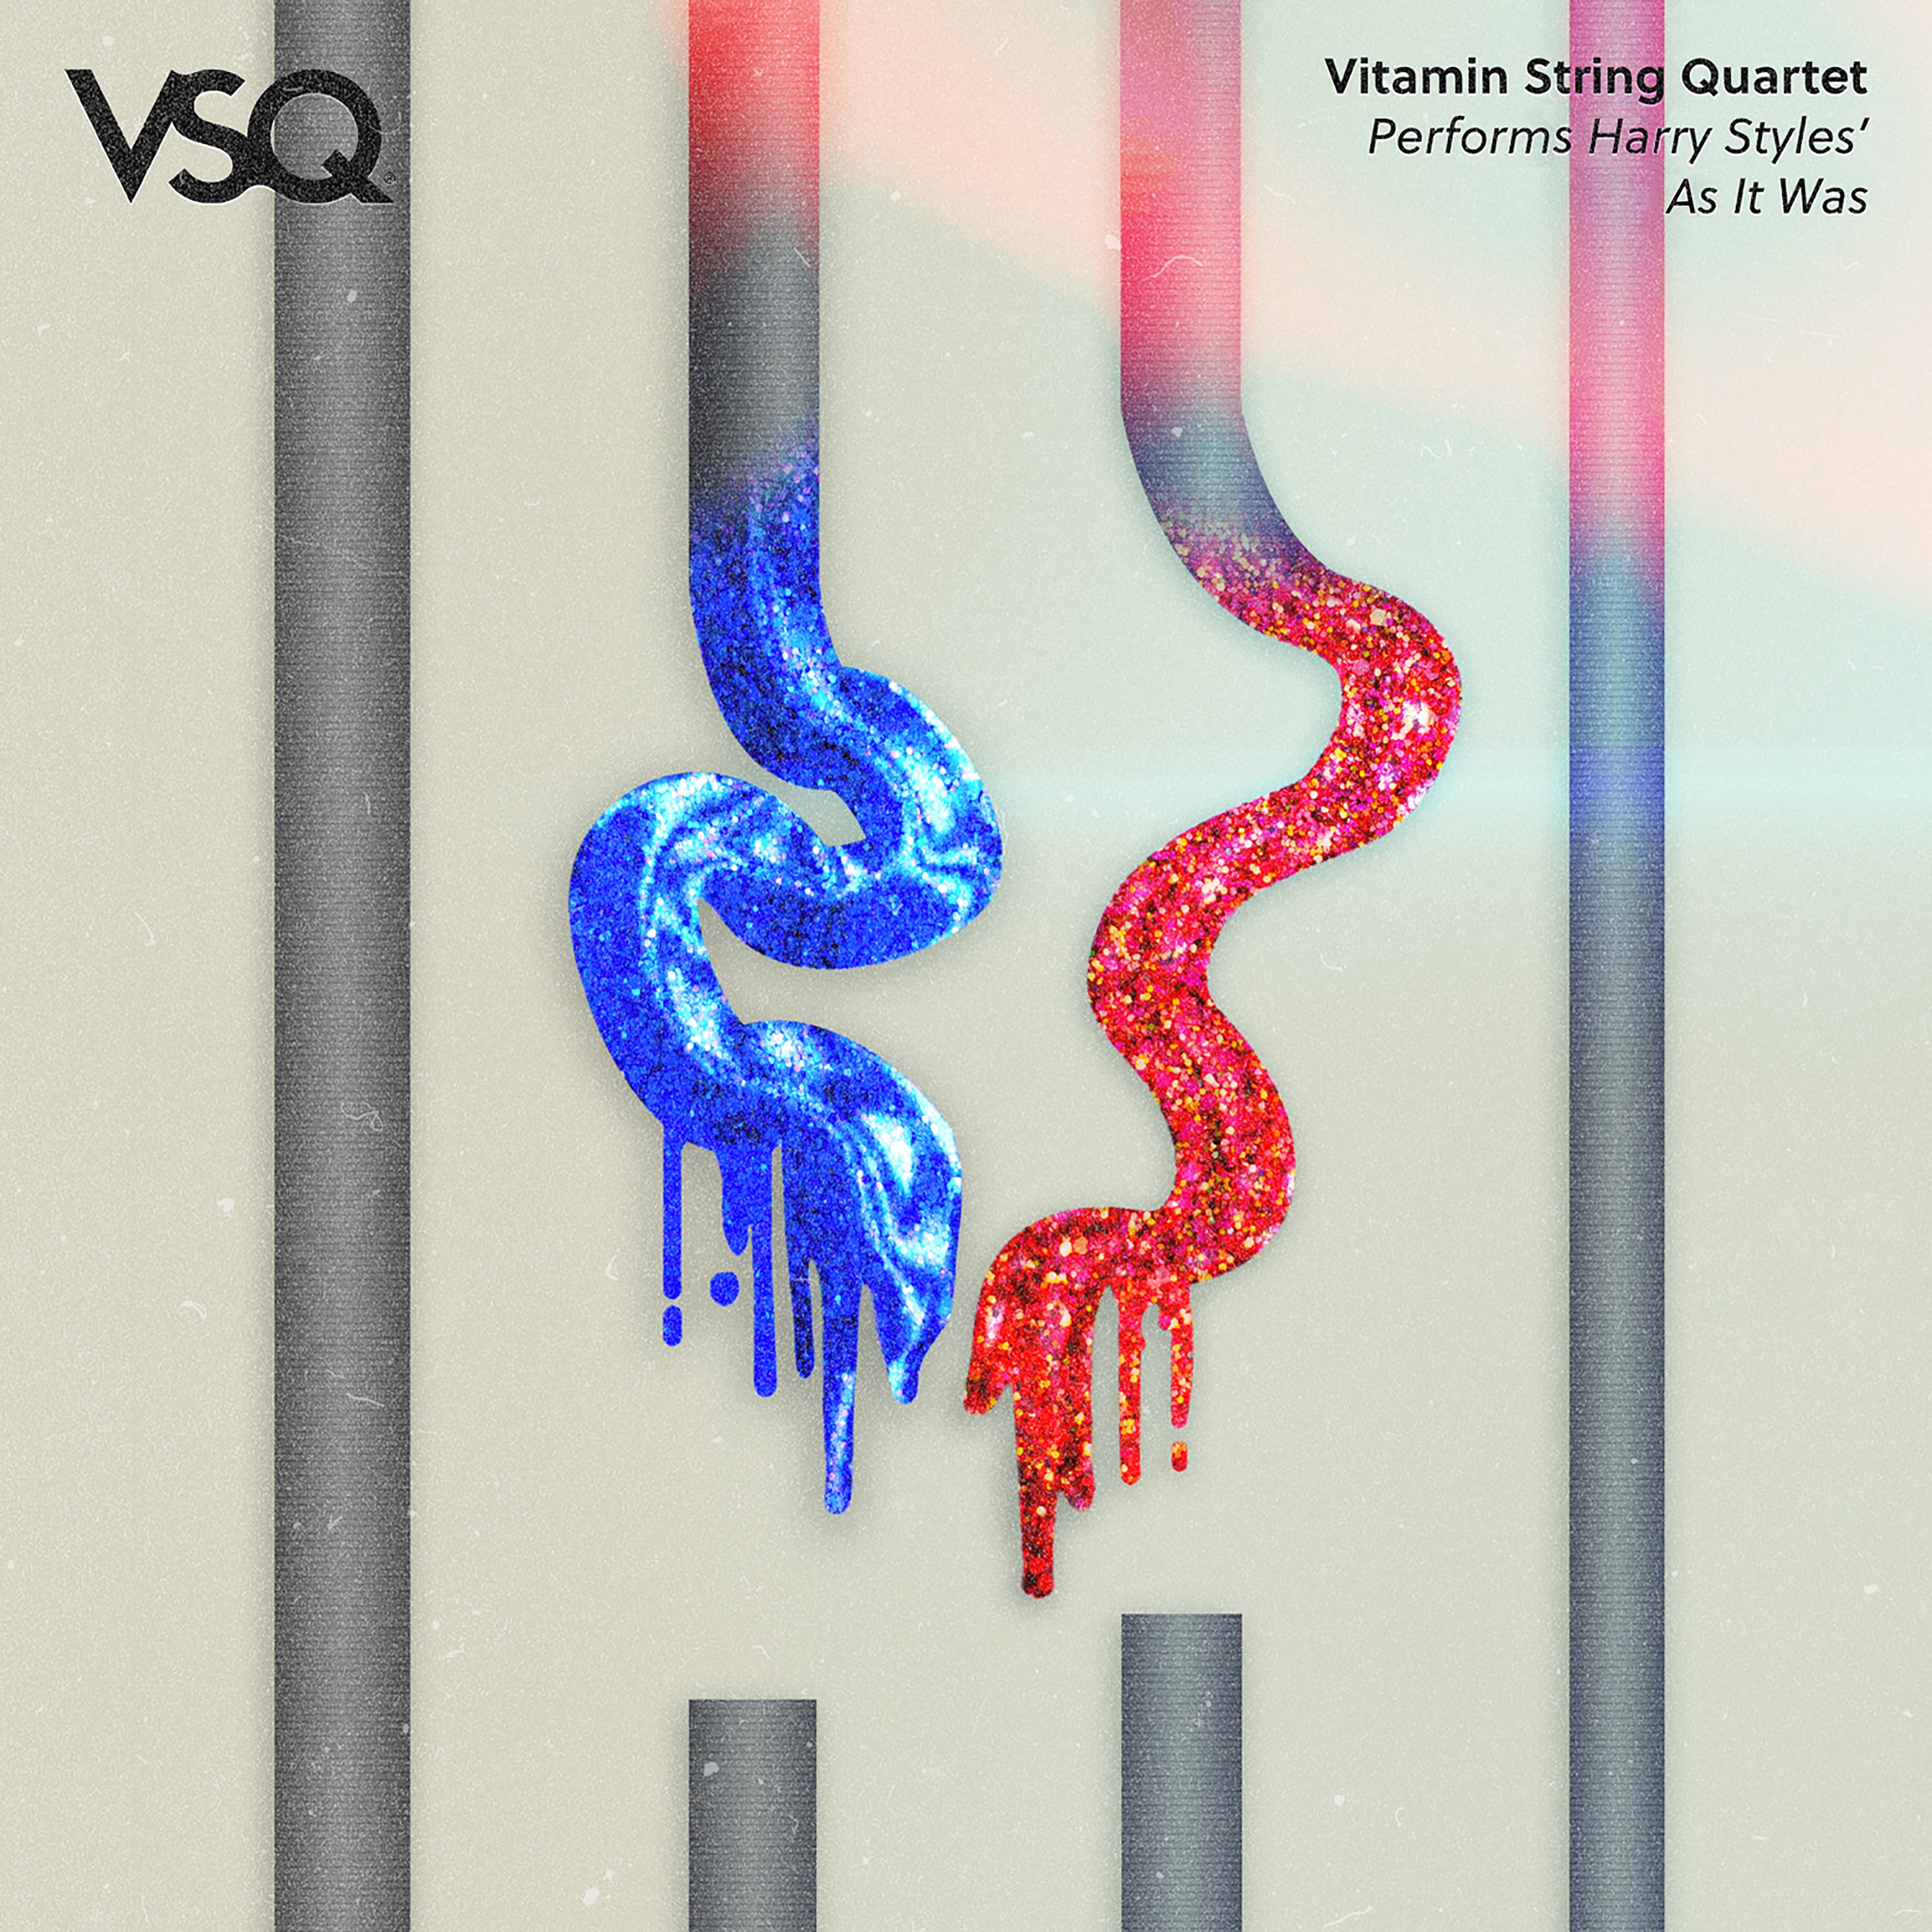 As It Was instrumental cover by Vitamin String Quartet album